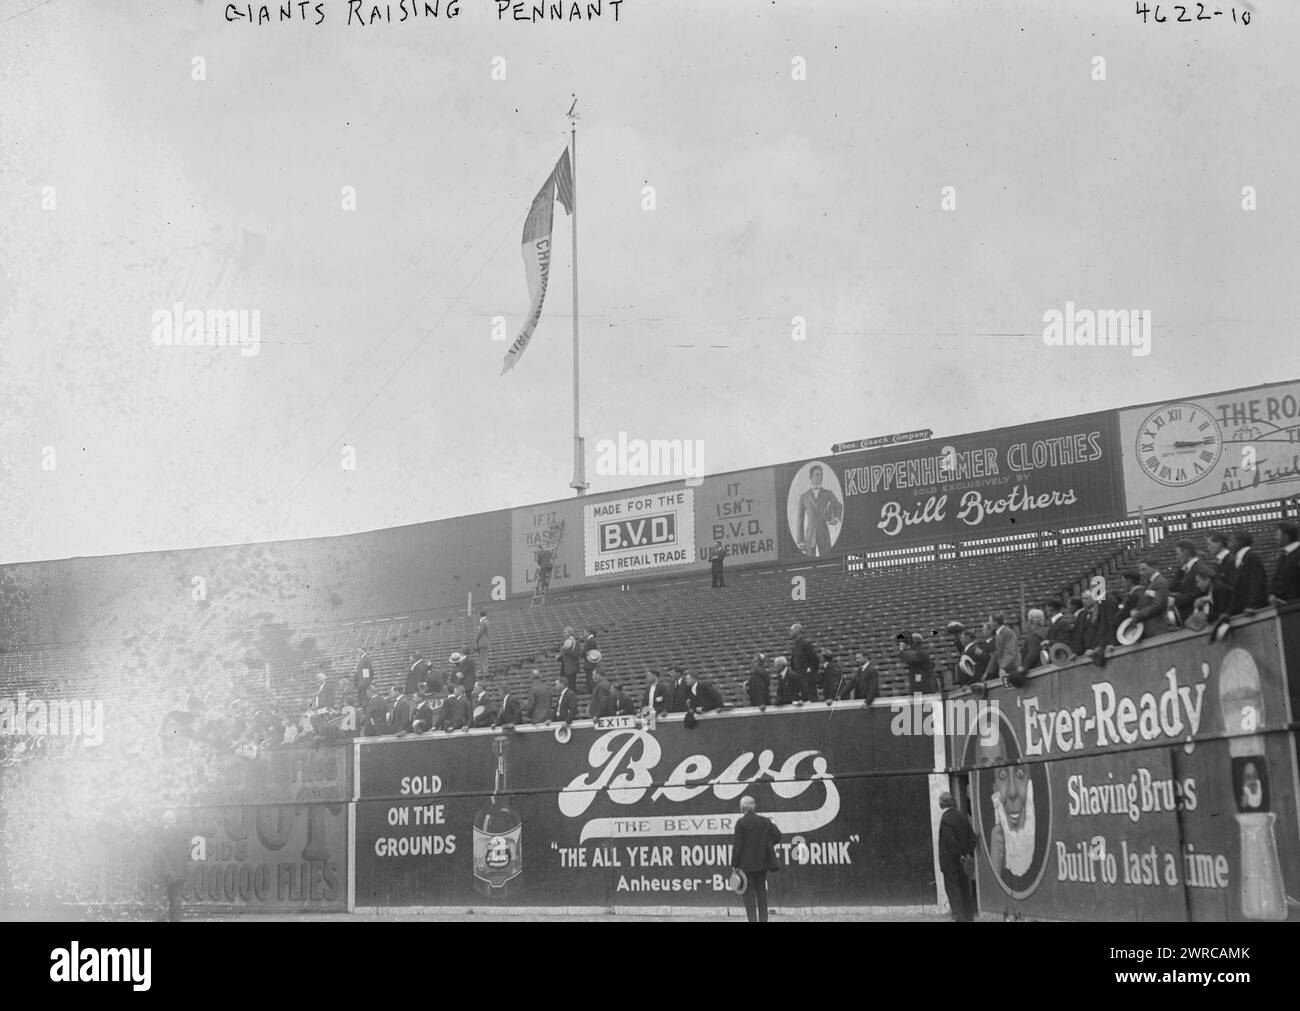 Giants raising pennant, 1918 June 14, Baseball, Glass negatives, 1 negative: glass Stock Photo